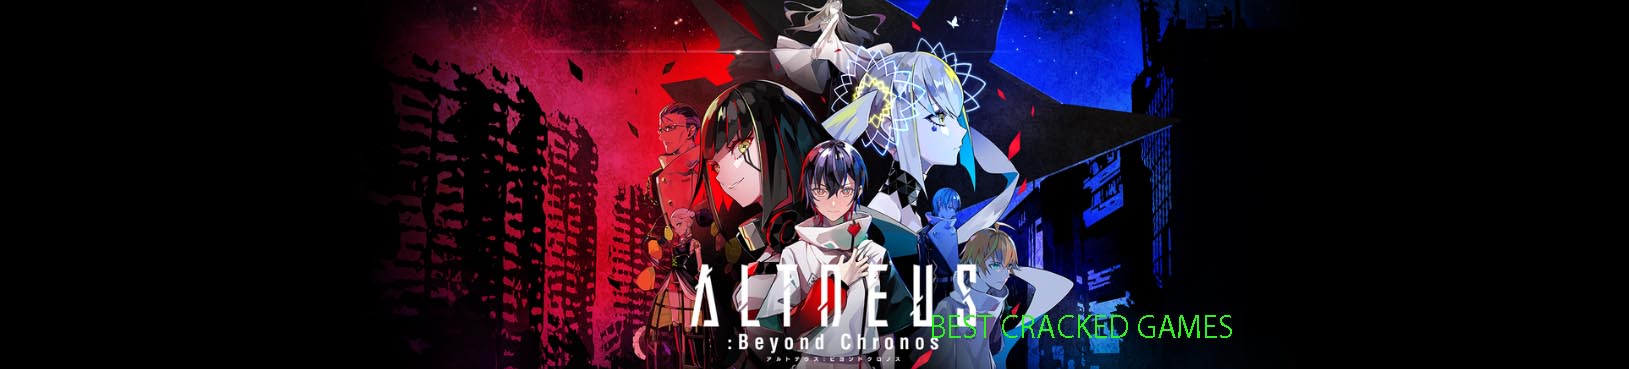 ALTDEUS: Beyond Chronos, game crack, free download